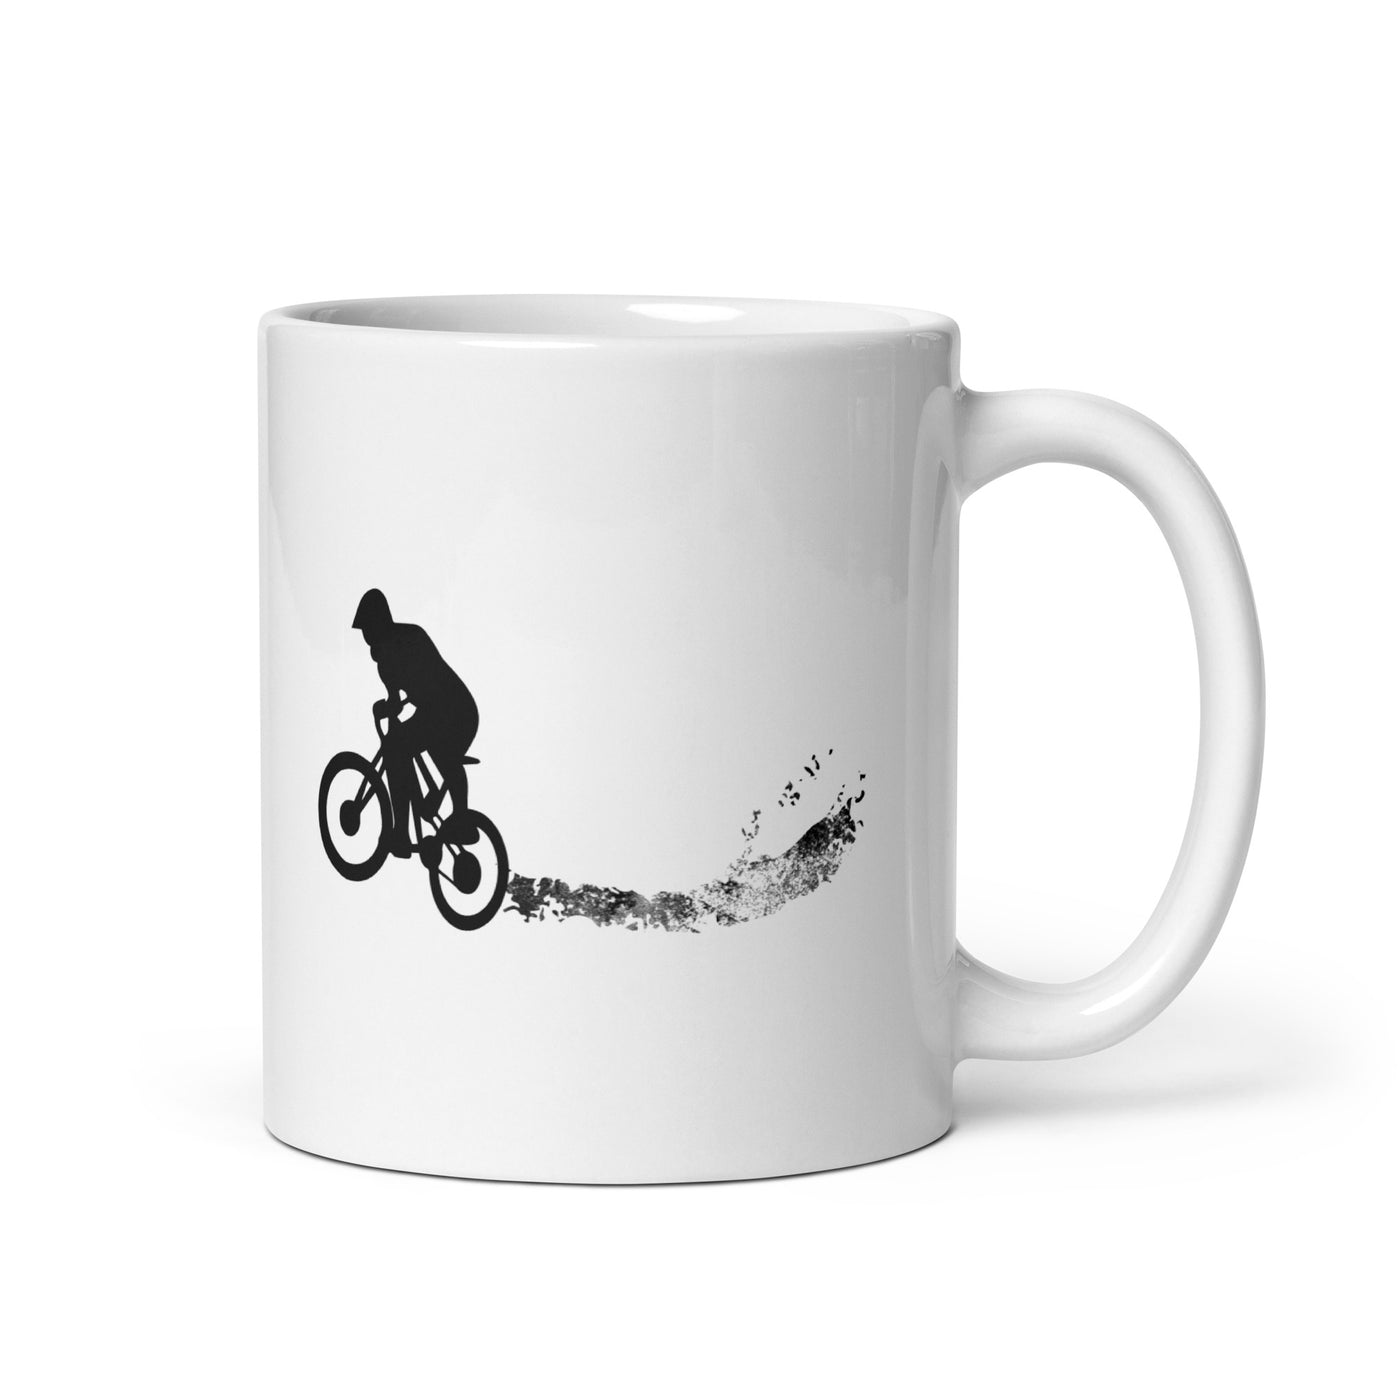 Cycling (11) - Tasse fahrrad